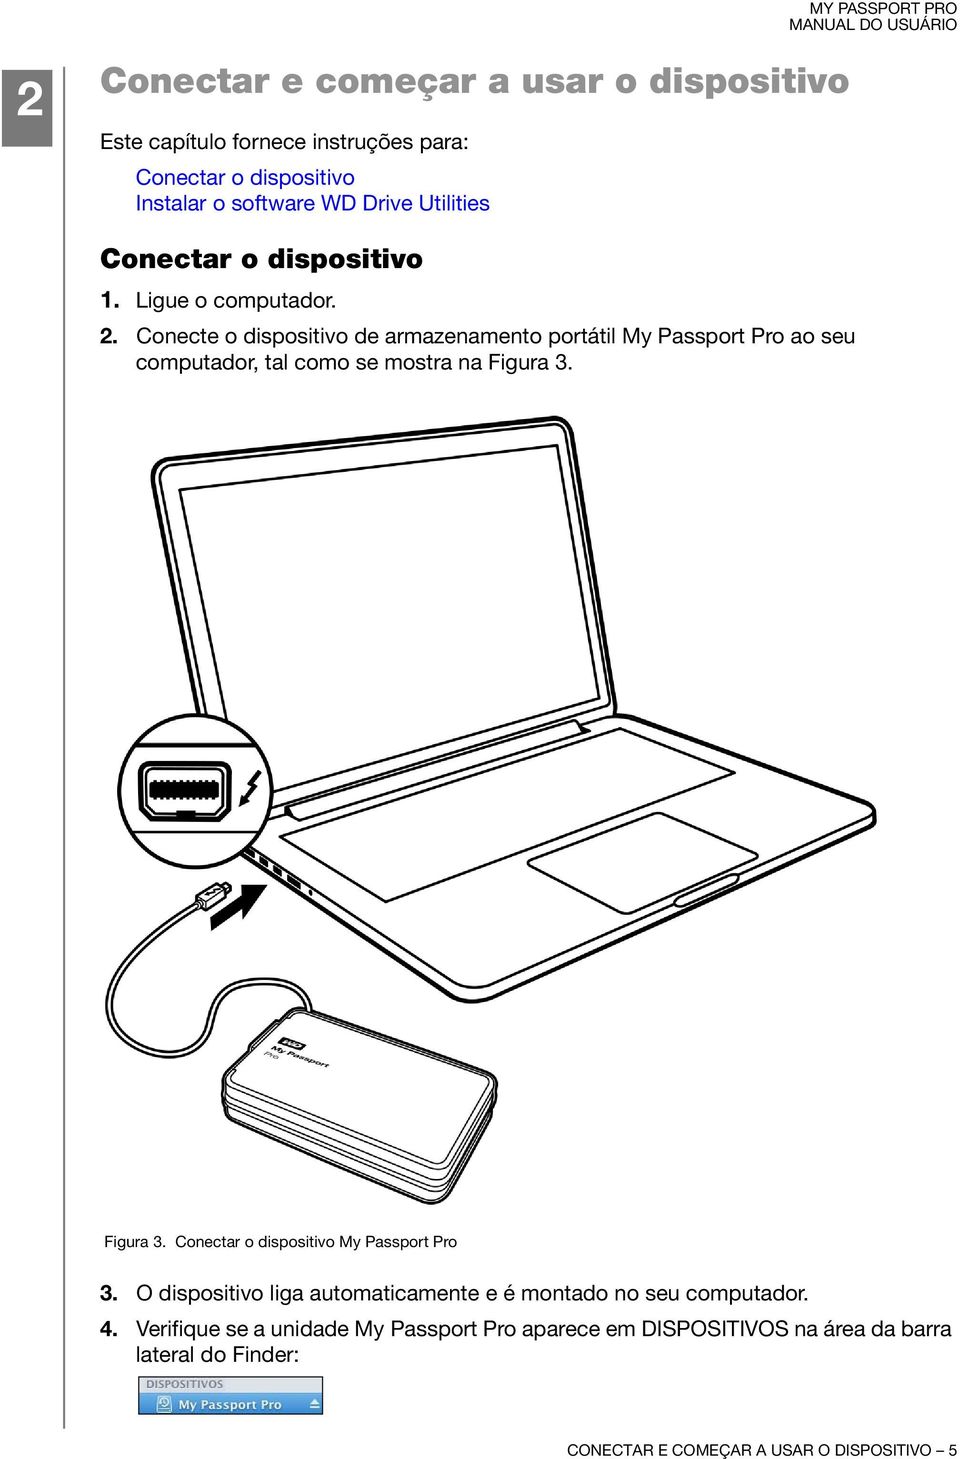 Conecte o dispositivo de armazenamento portátil My Passport Pro ao seu computador, tal como se mostra na Figura 3.